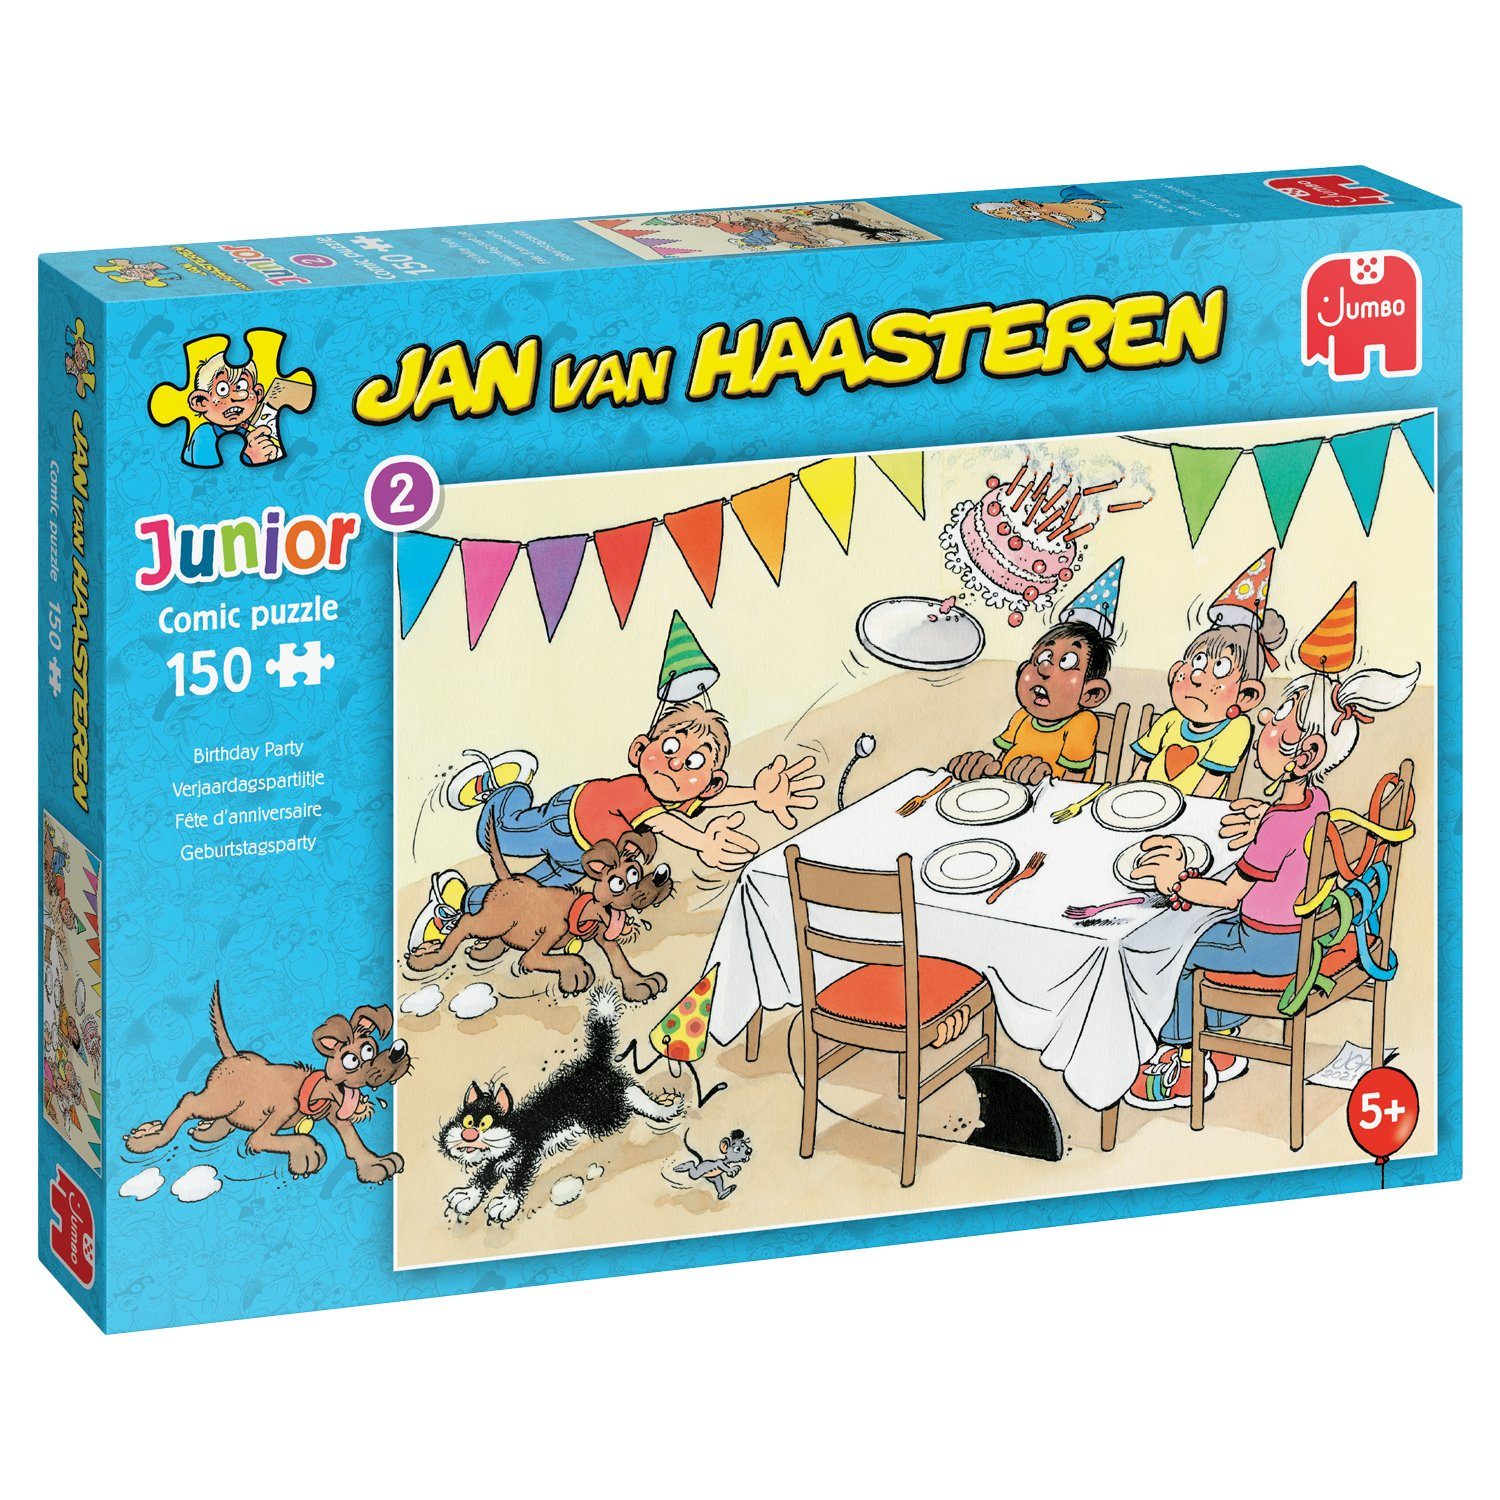 150 Haasteren Europe Puzzleteile, Puzzle 2 in Spiele Geburtstagsparty, Junior van Jumbo Jan Made